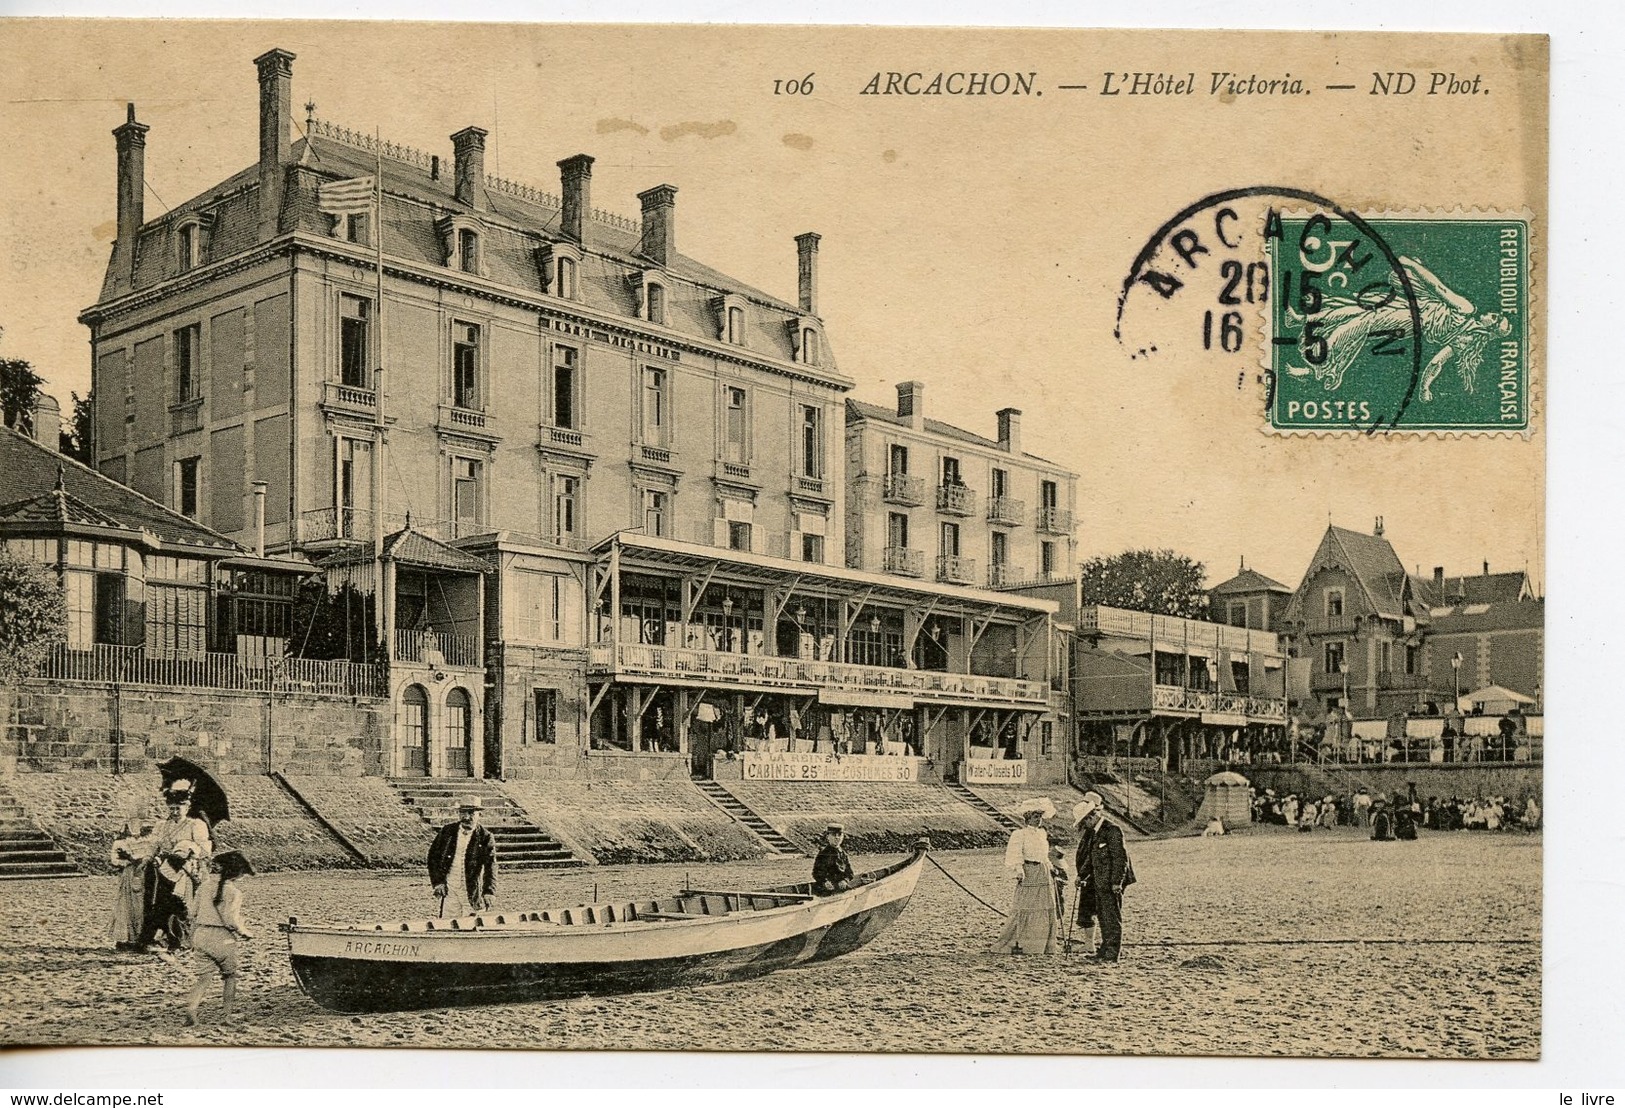 CPA ARCACHON. CARTE ENTIEREMENT DEDOUBLEE. L'HOTEL VICTORIA 1910